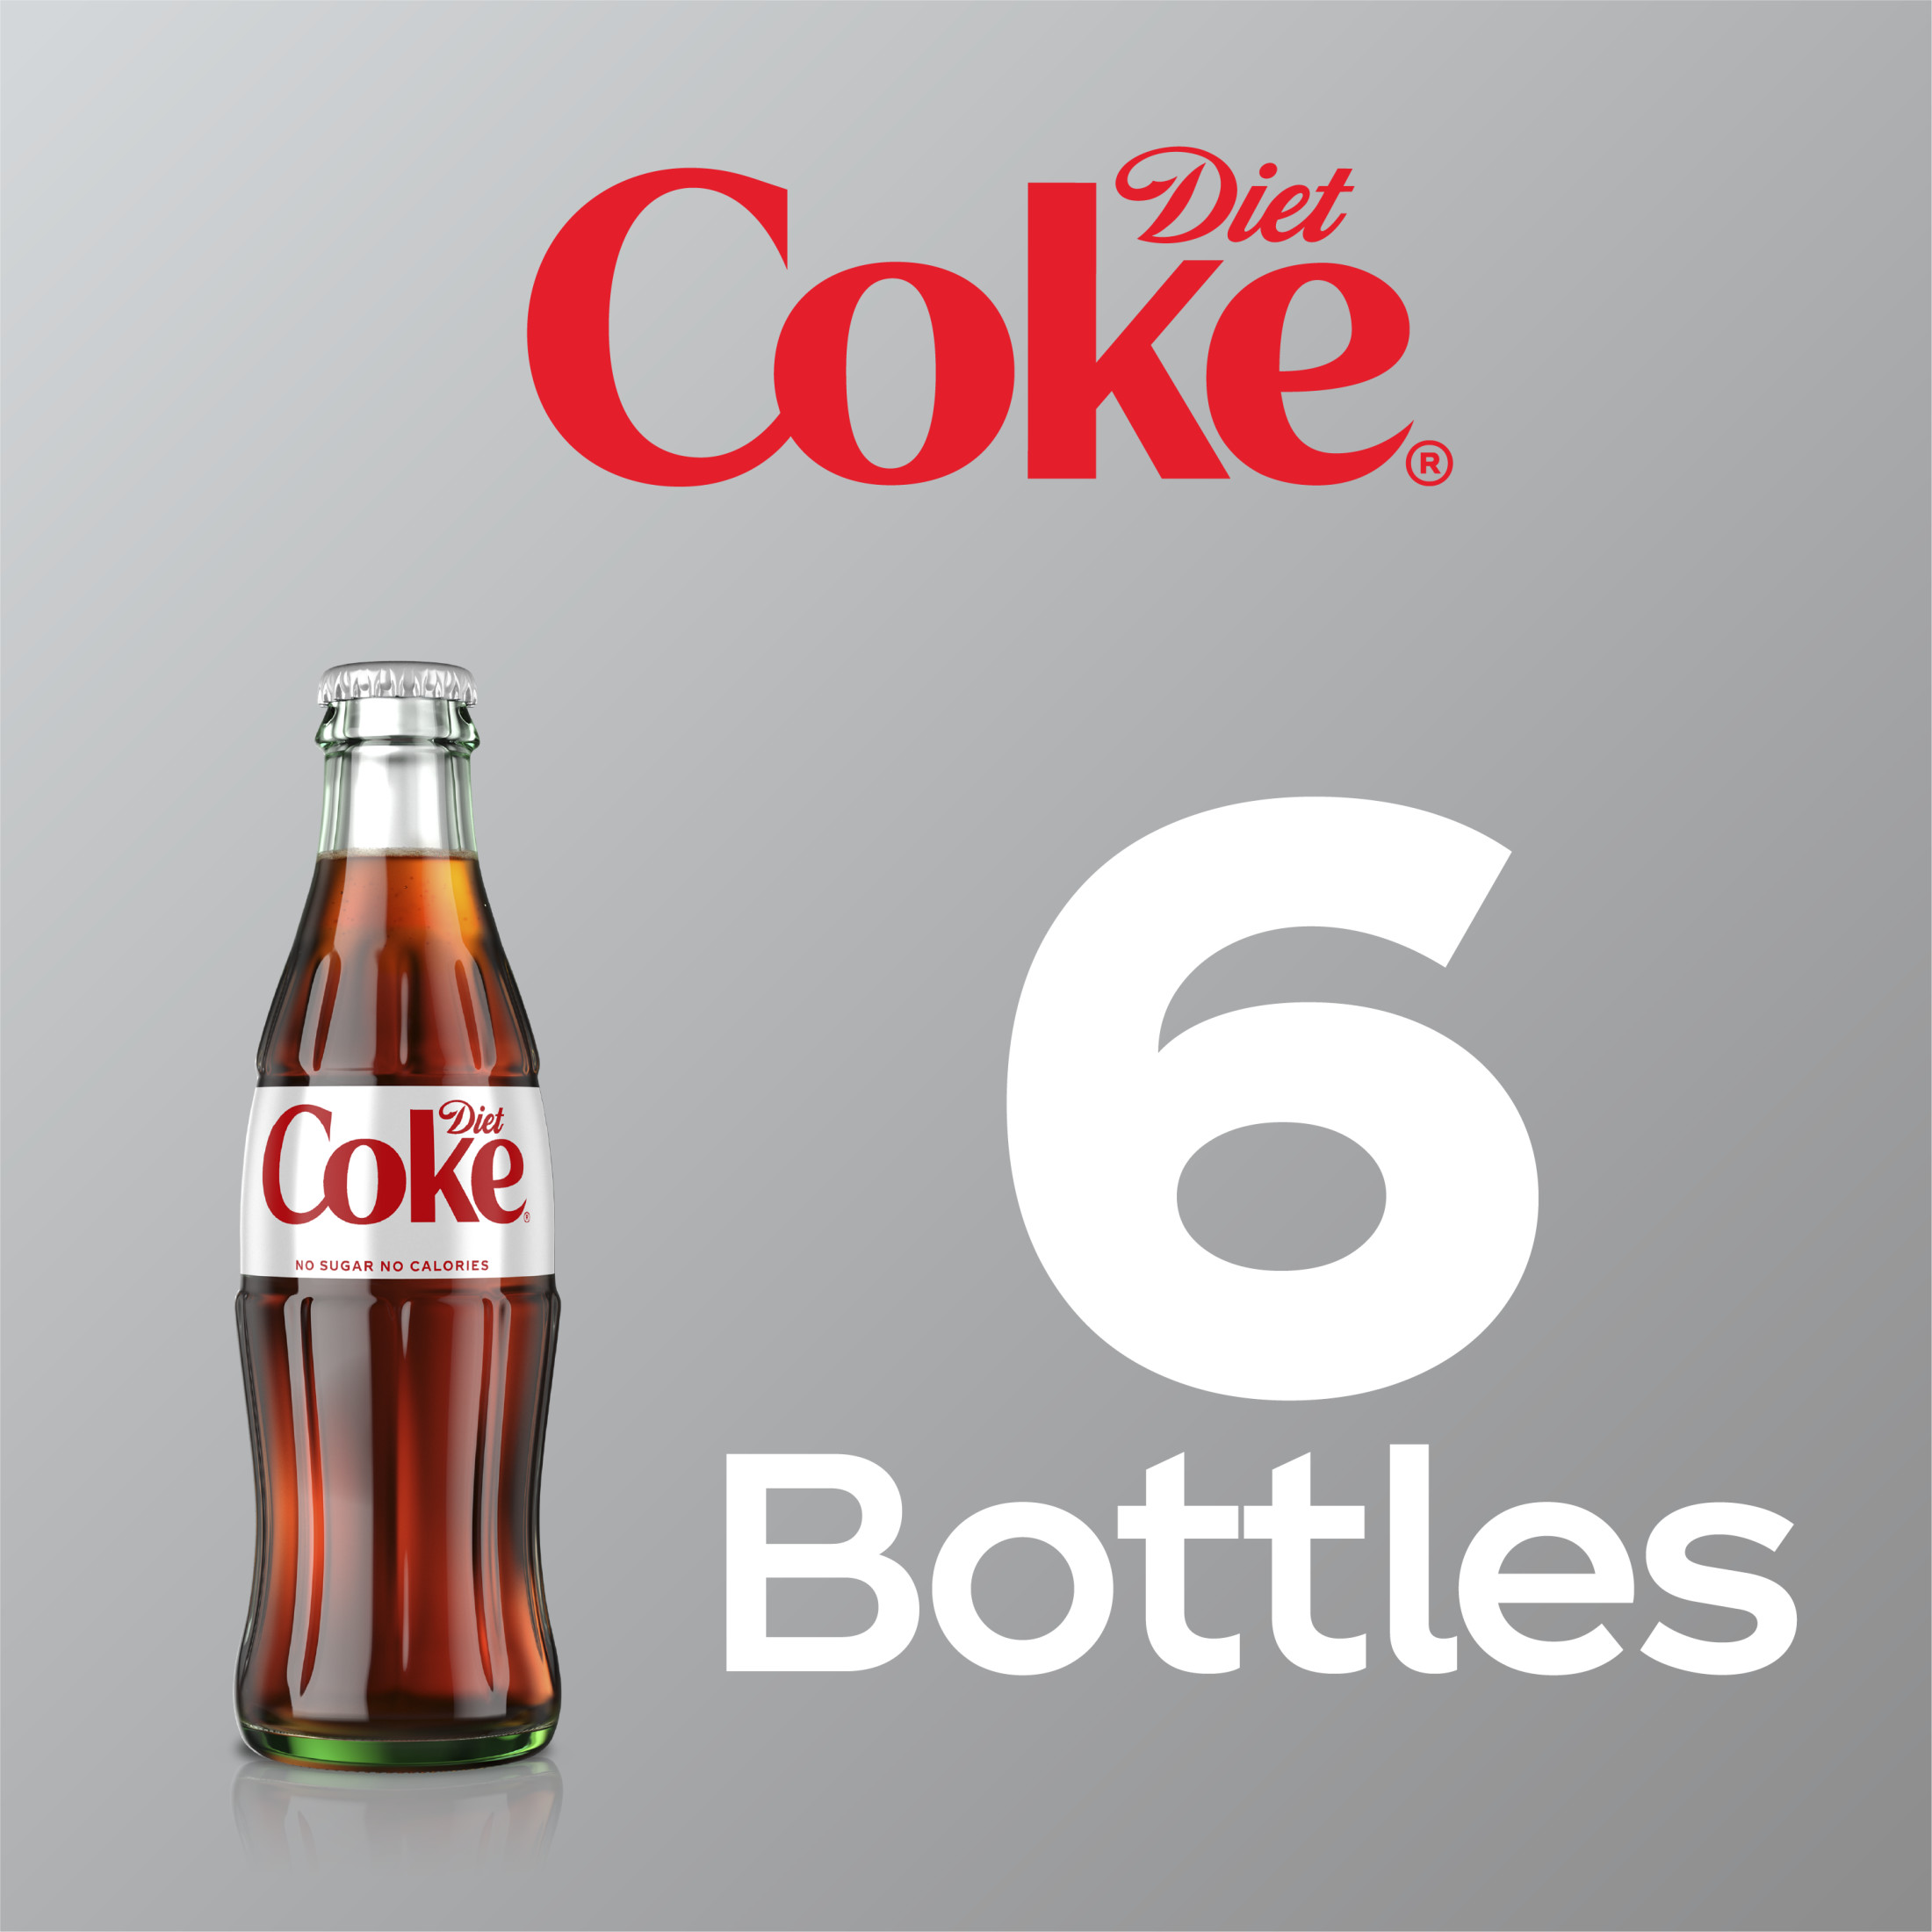 Diet Coke Diet Cola Soda Pop, 8 fl oz Glass Bottles, 6 Pack - image 4 of 9